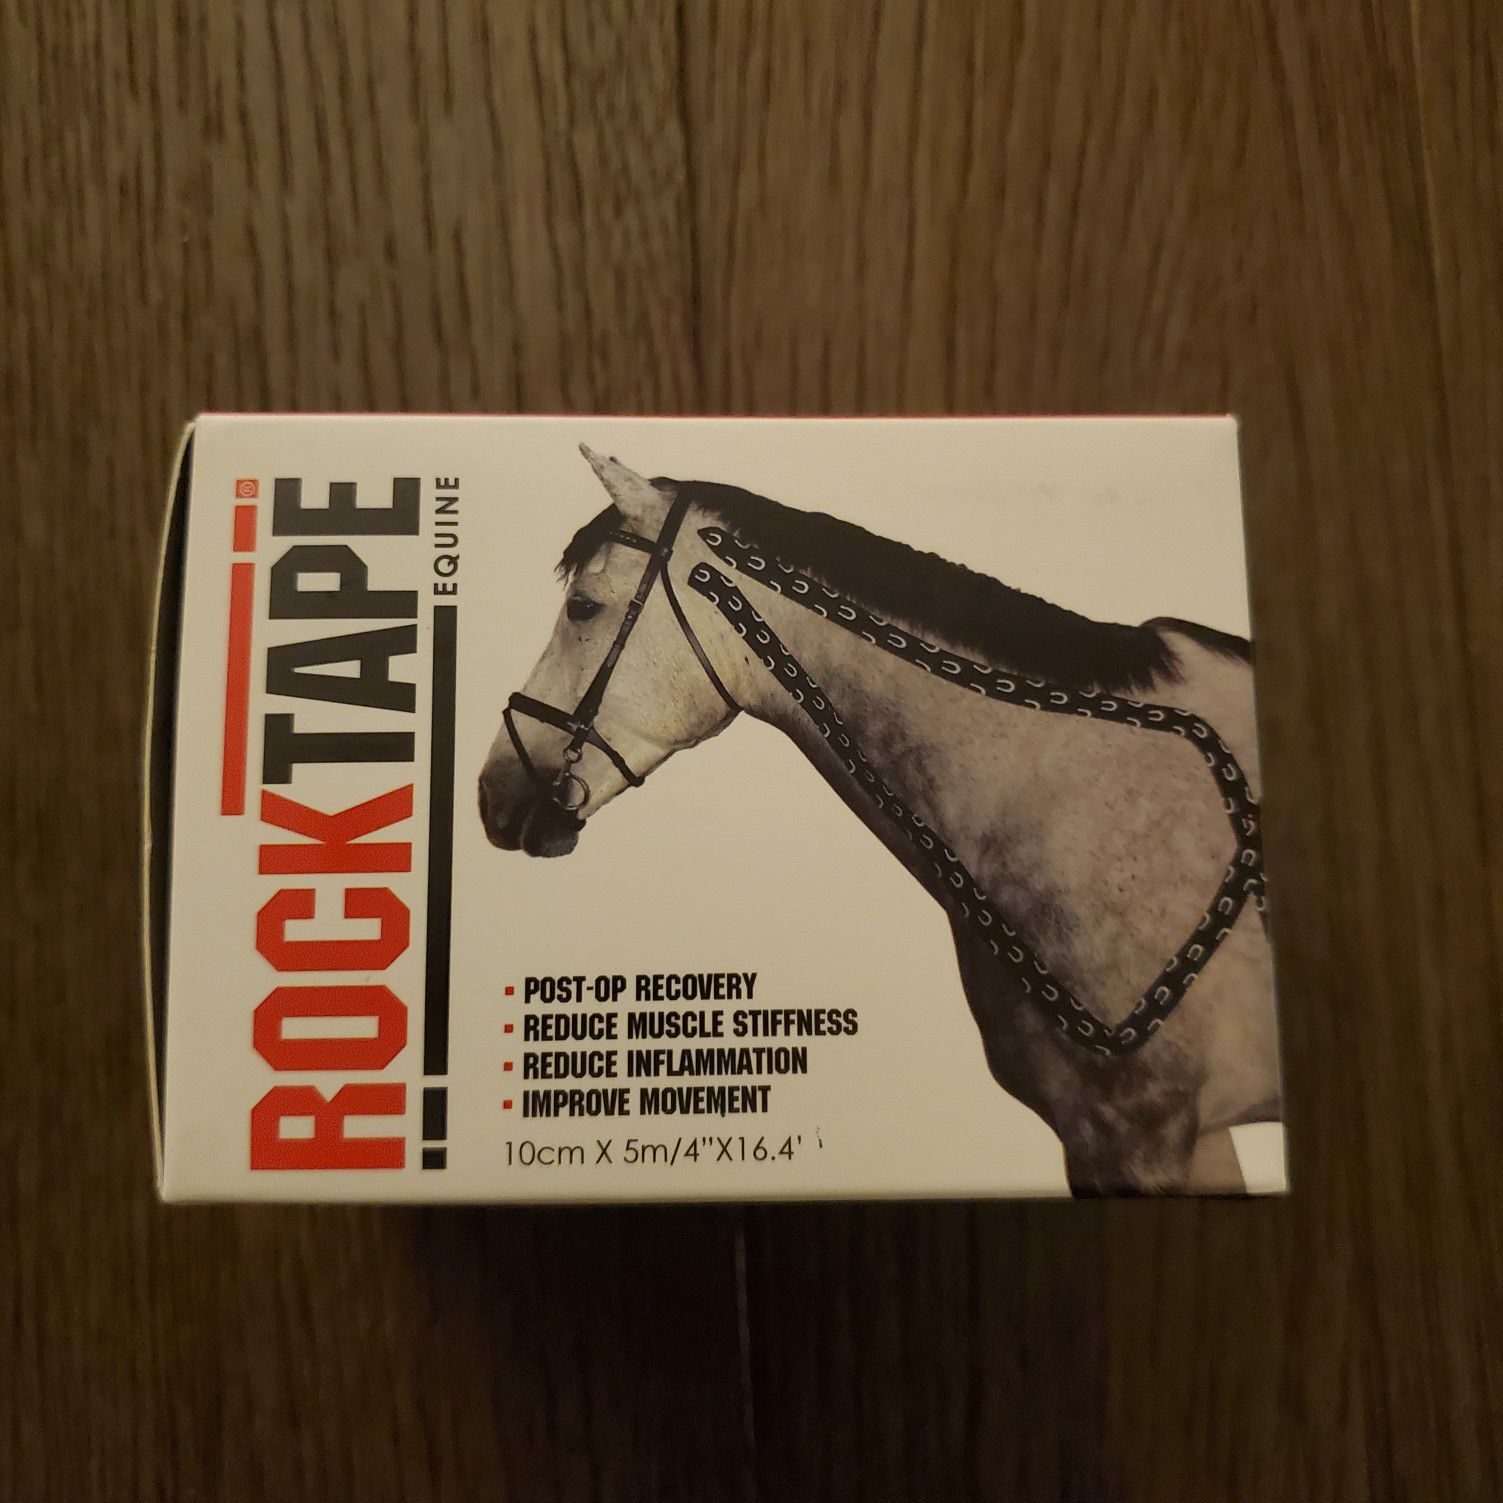 NEW Rocktape 4" Equine Kinesiology Tape for Horses, Horse Shoe(Box Damage)